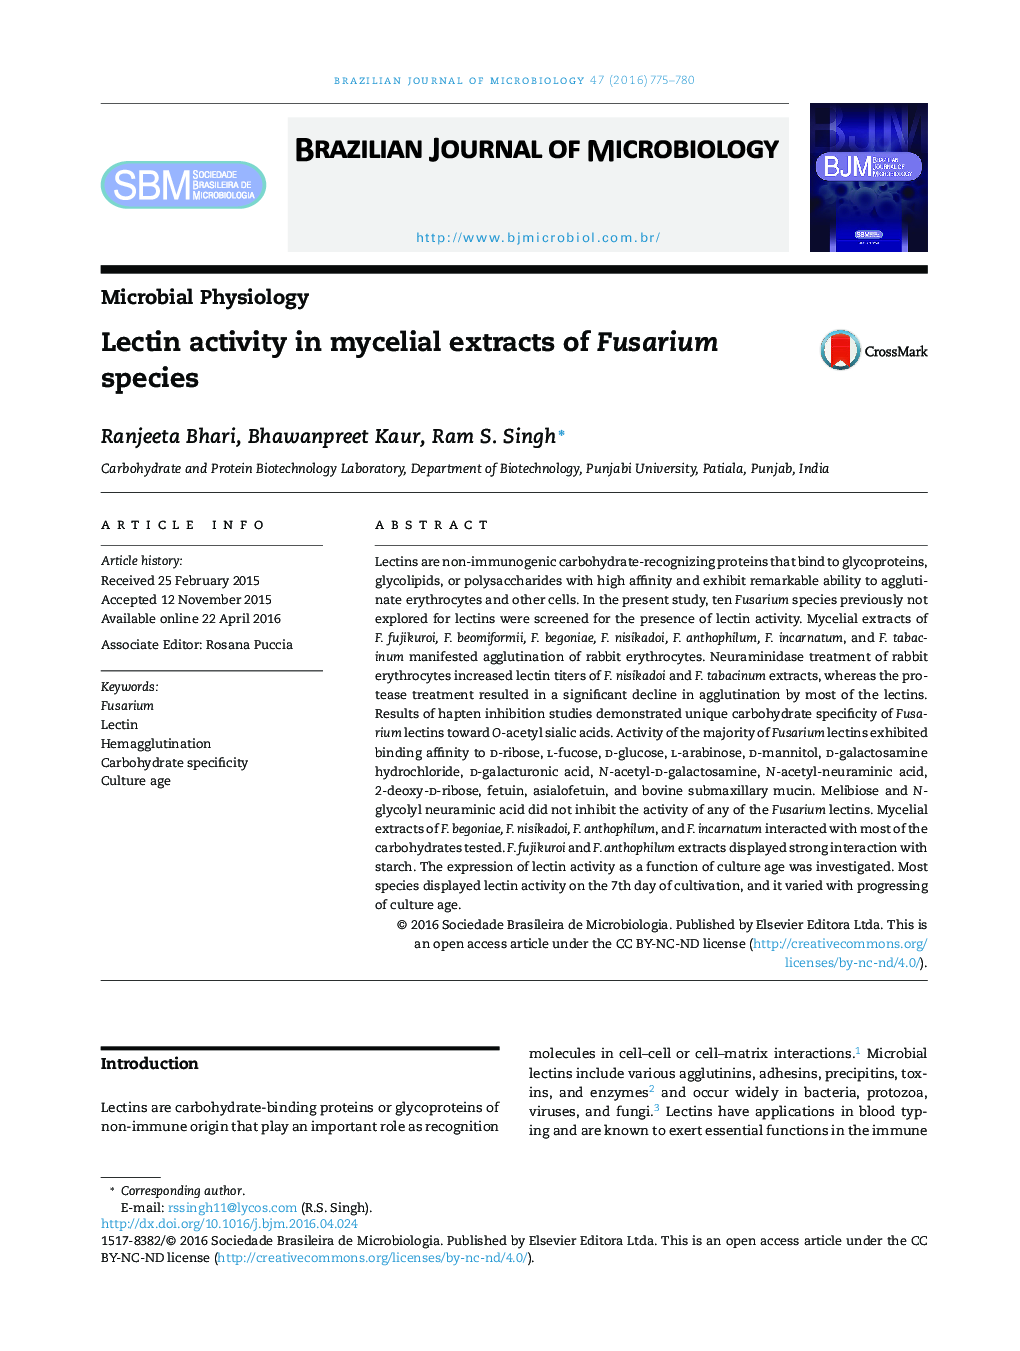 Lectin activity in mycelial extracts of Fusarium species